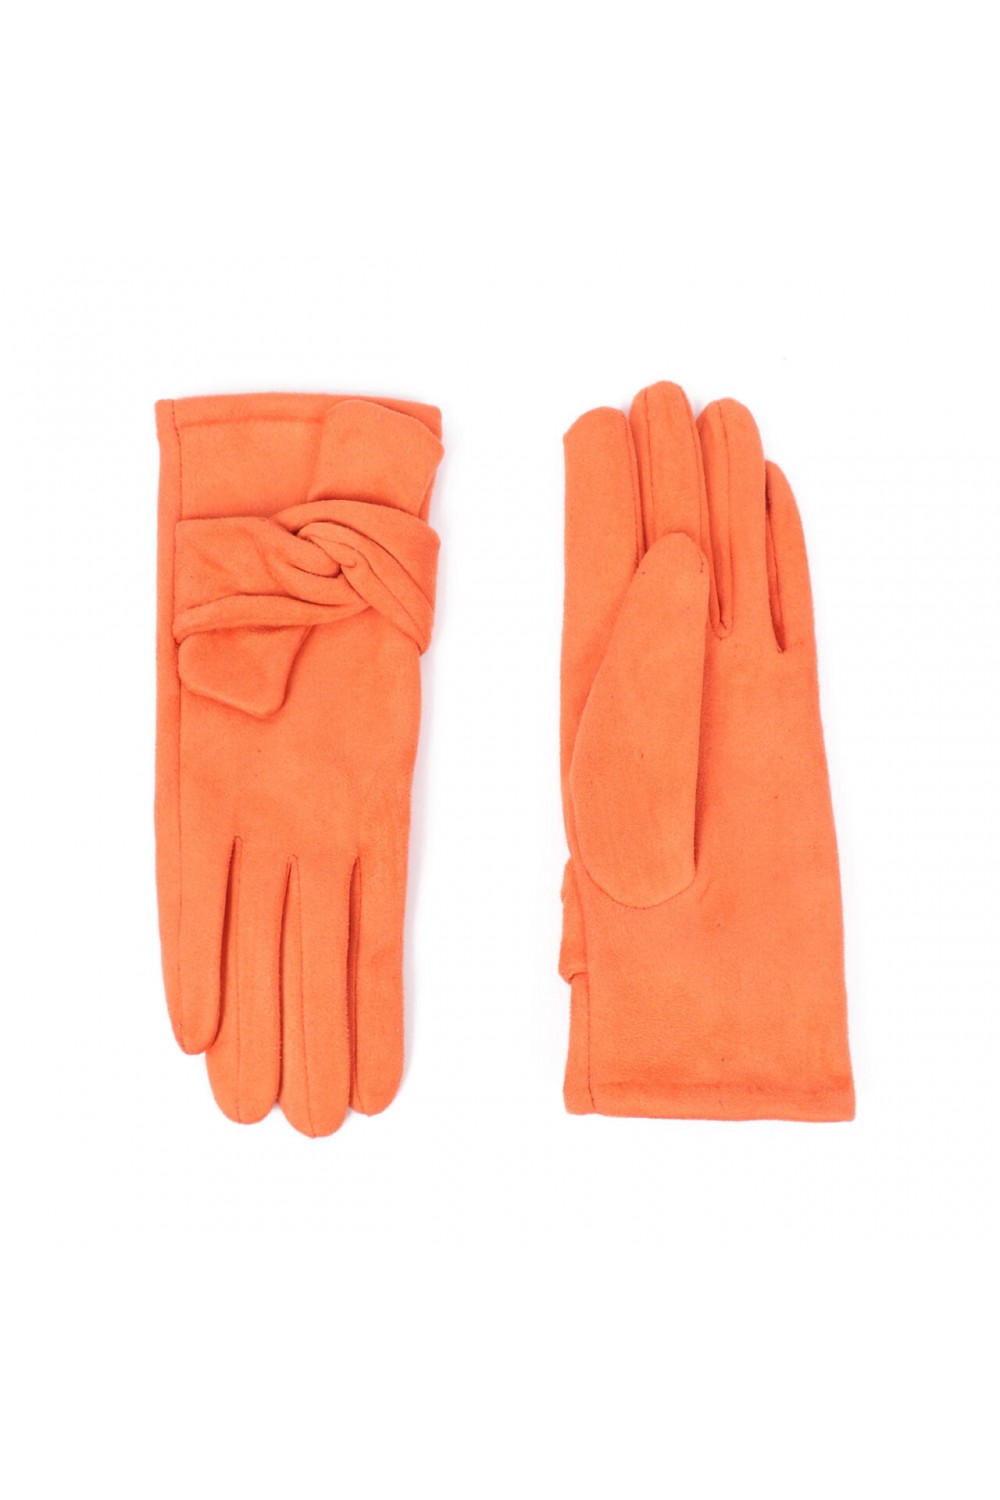 Zelly Tied Back Glove Orange